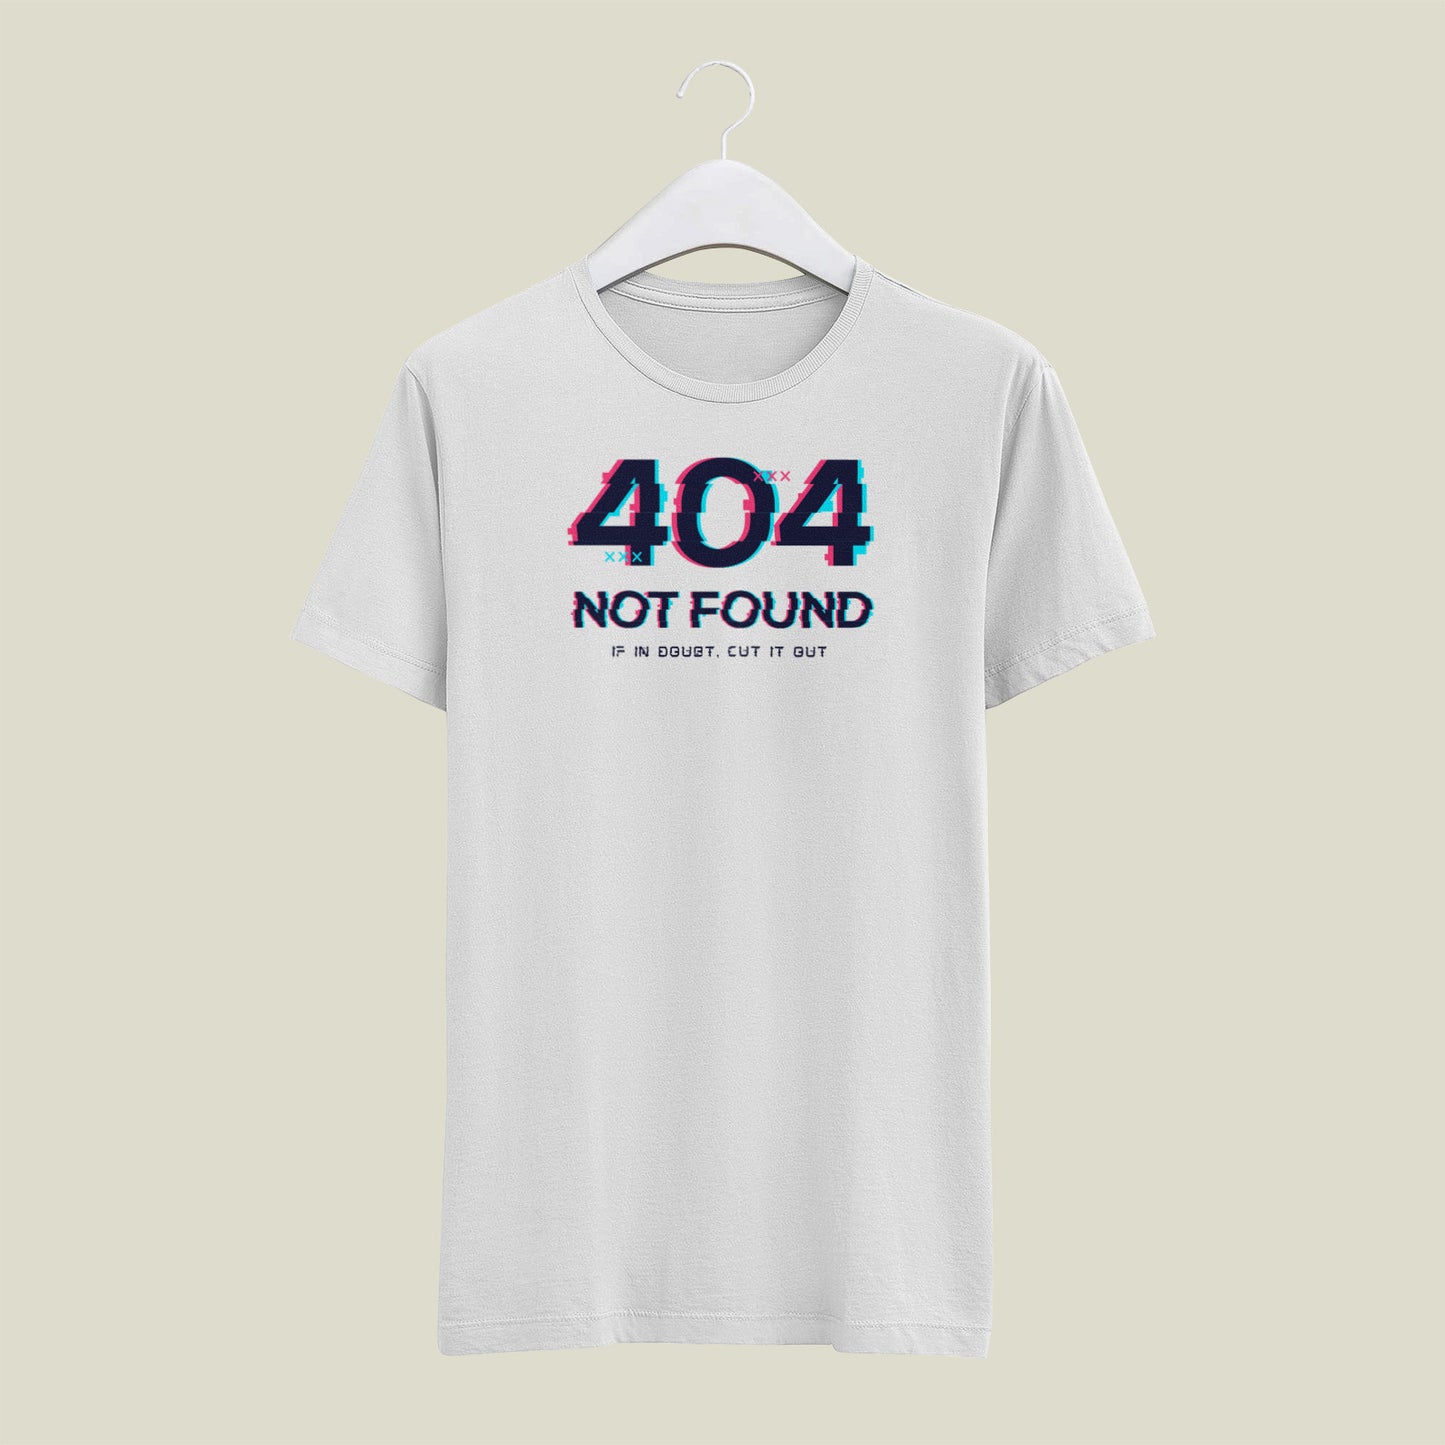 404 NOT FOUND T shirt